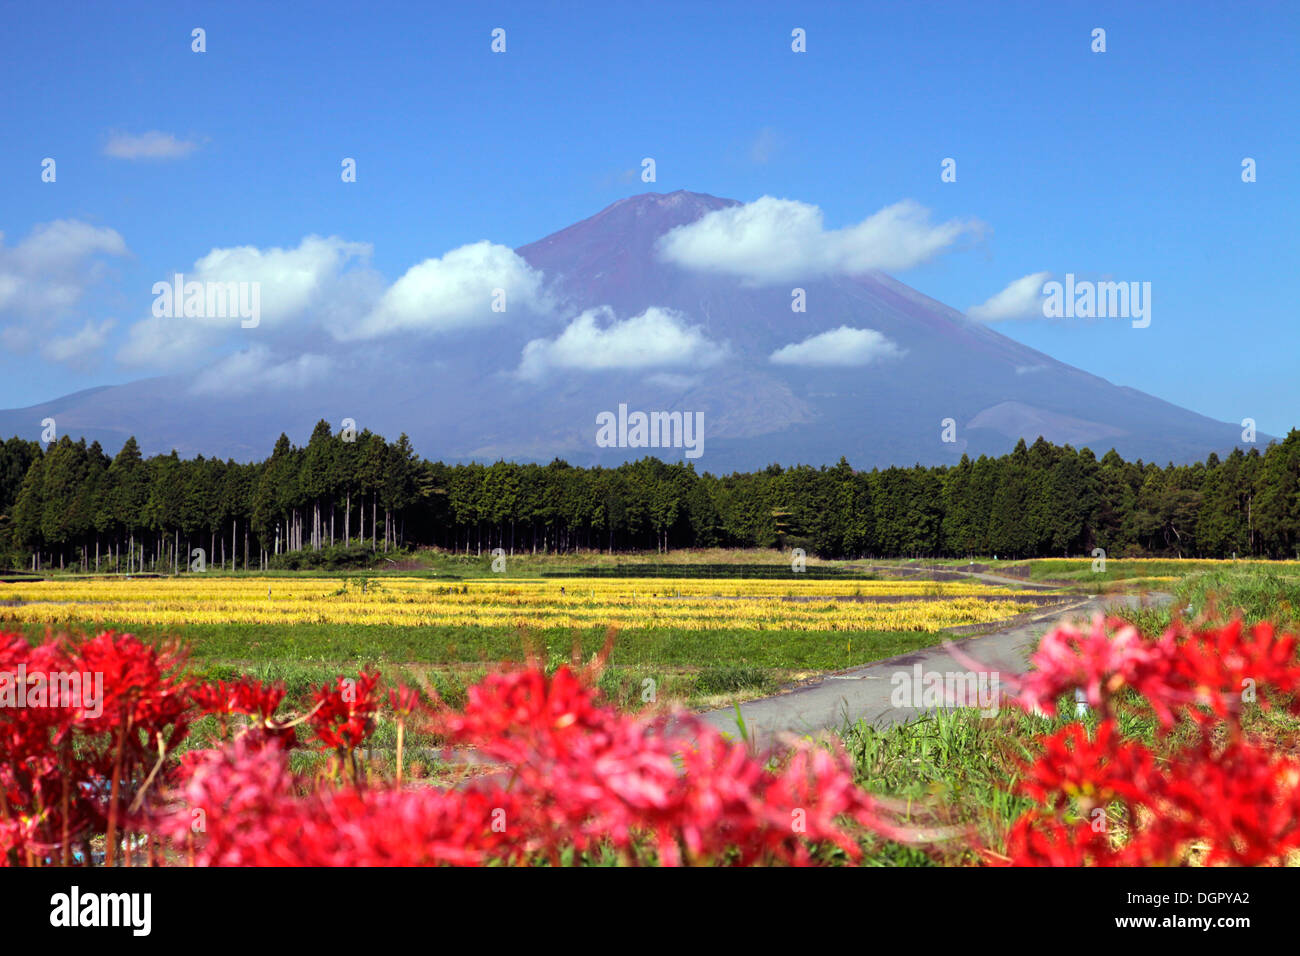 Mount Fuji and red spider lily Shizuoka Japan Stock Photo